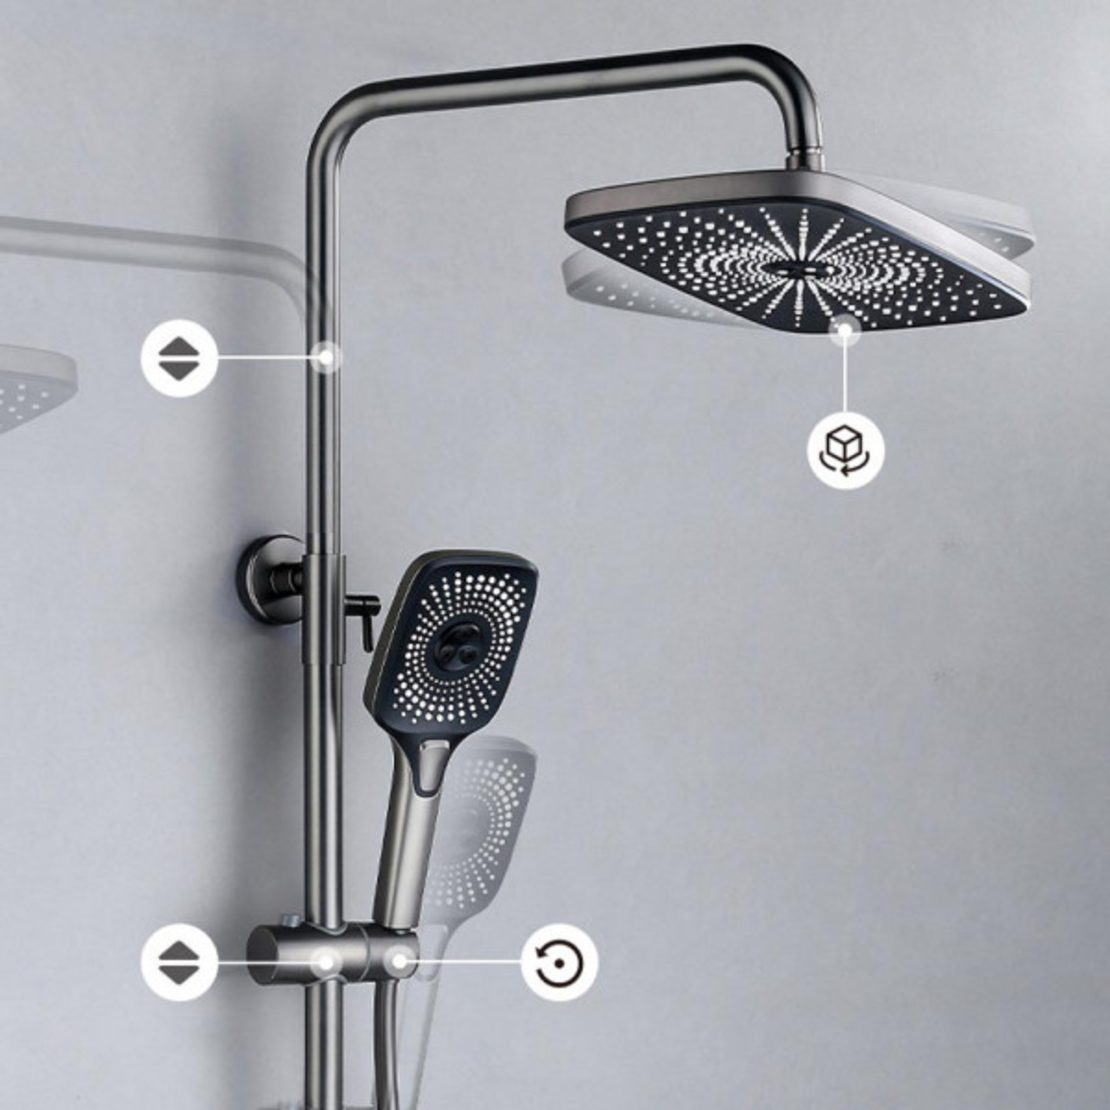 Луксозна мулти душ система с елегантен смесител VISION 003- Инокс,Графит или Черен, ROBOT SHOWER SET